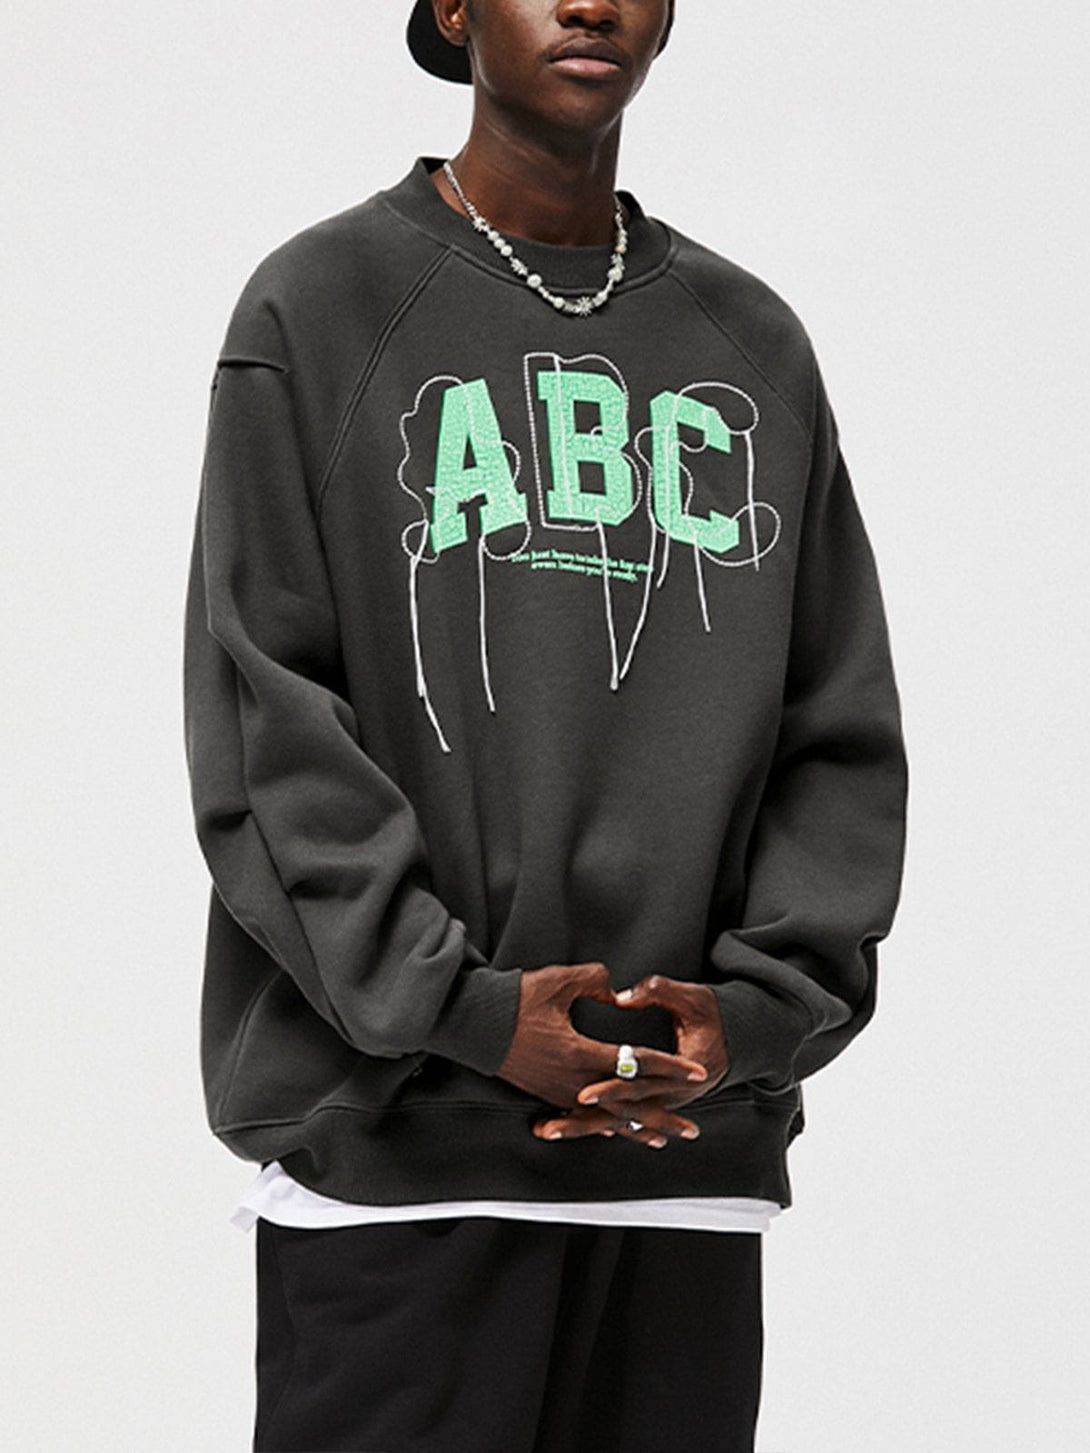 Levefly - "ABC" Embroidery Print Sweatshirt - Streetwear Fashion - levefly.com